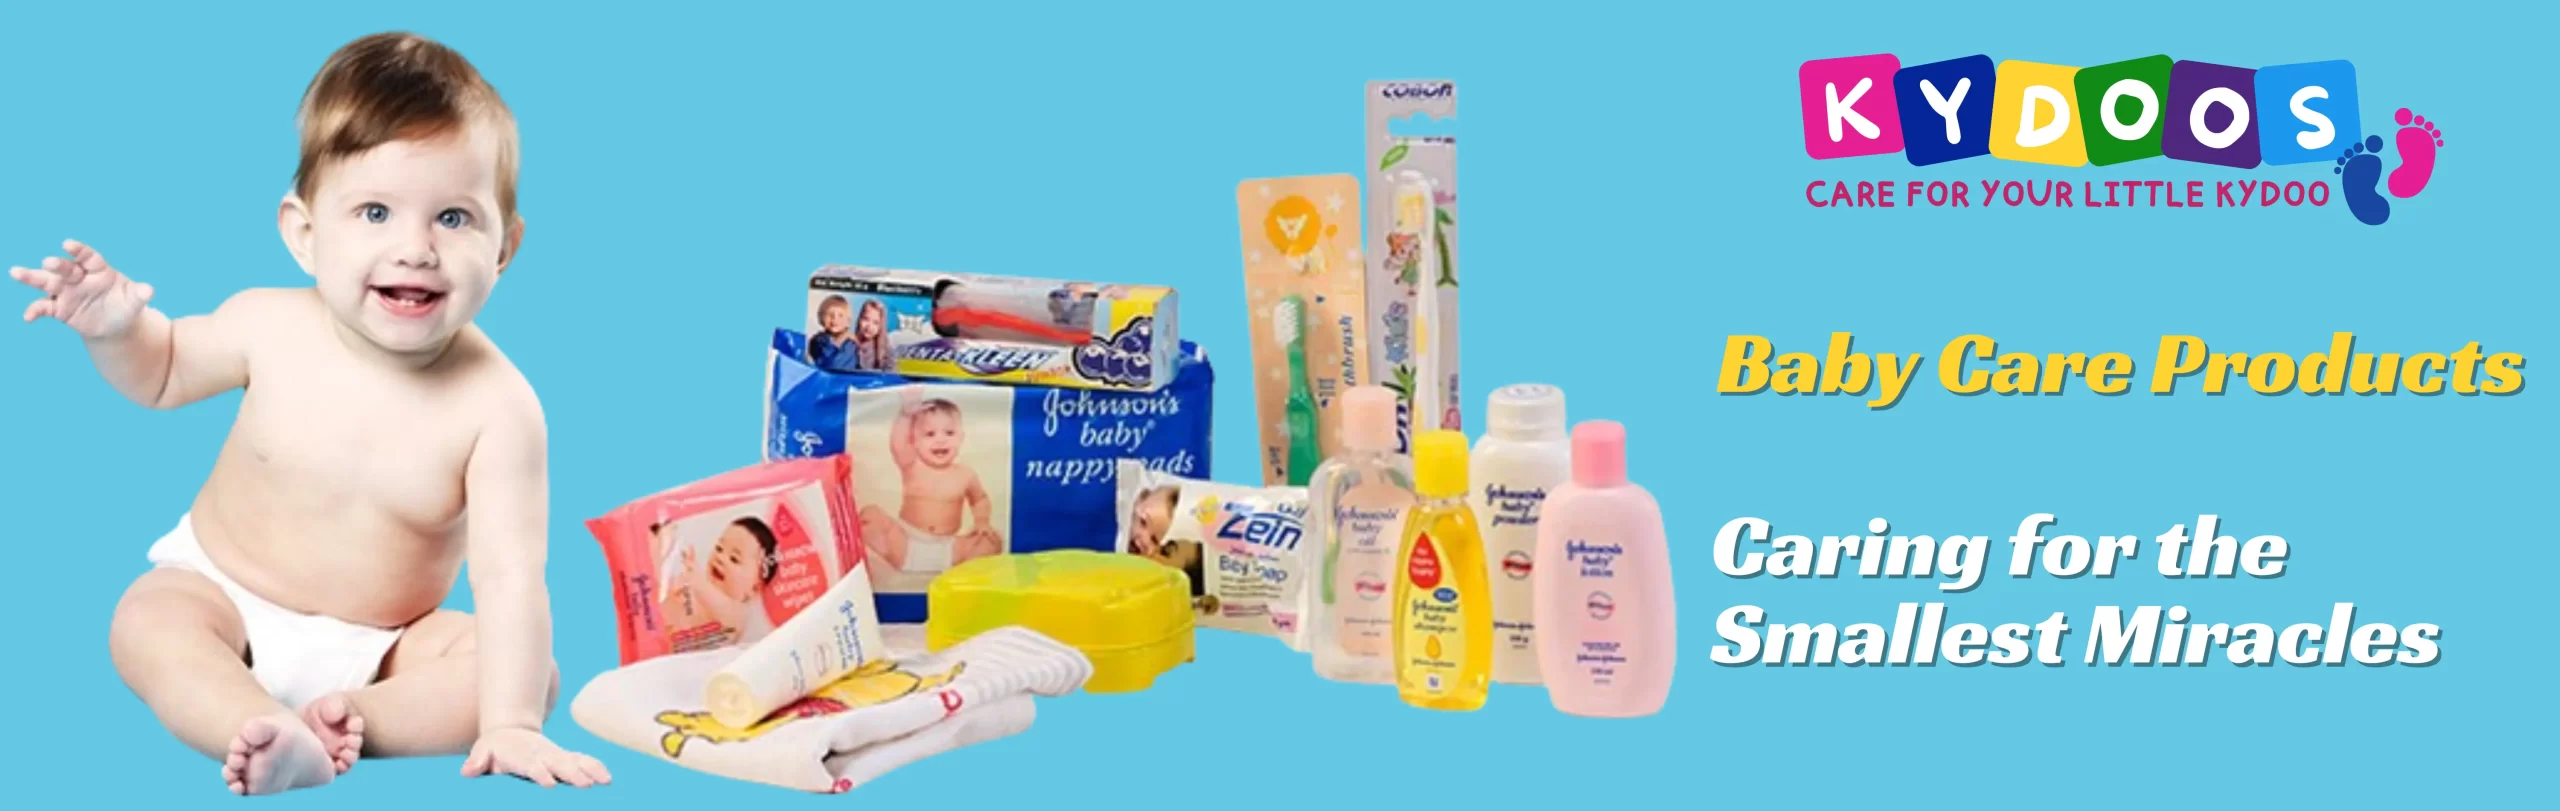 Kydoos Baby Care Products